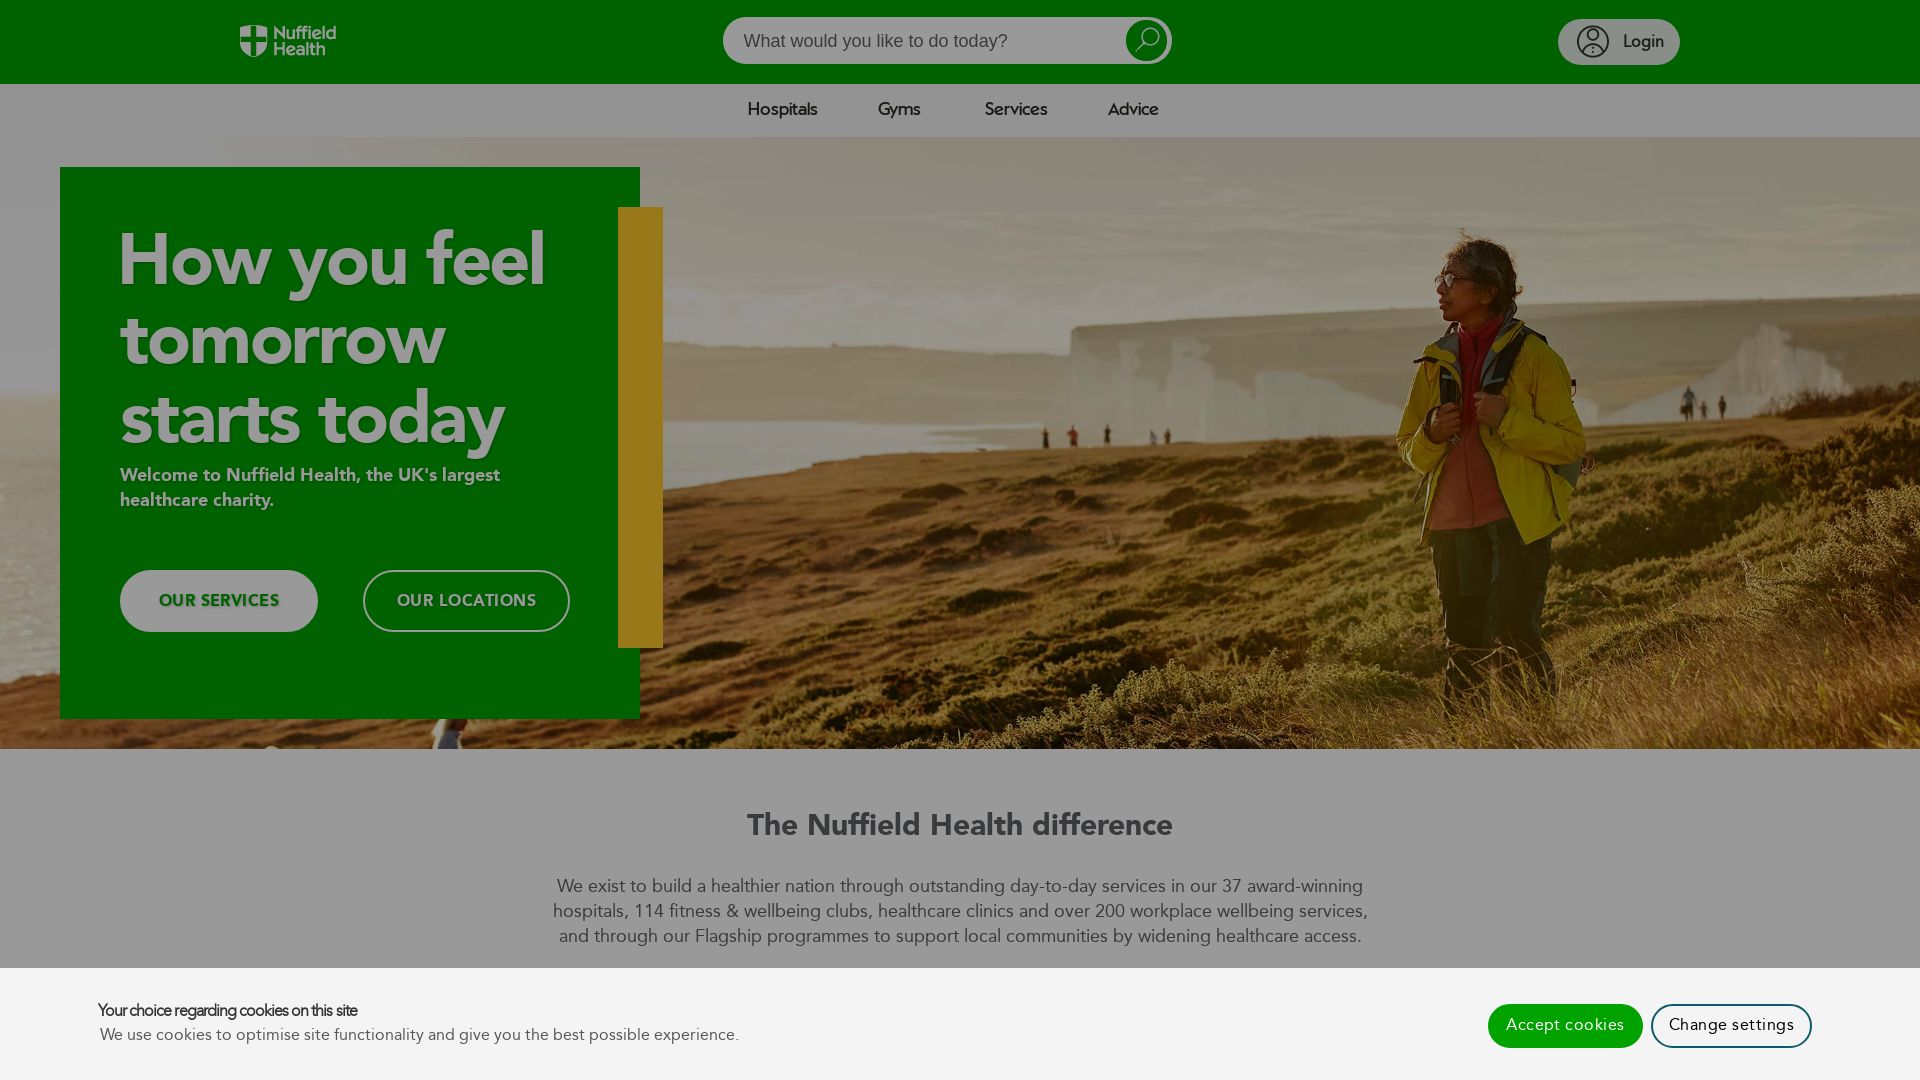 Website status nuffieldhealth.com is   ONLINE